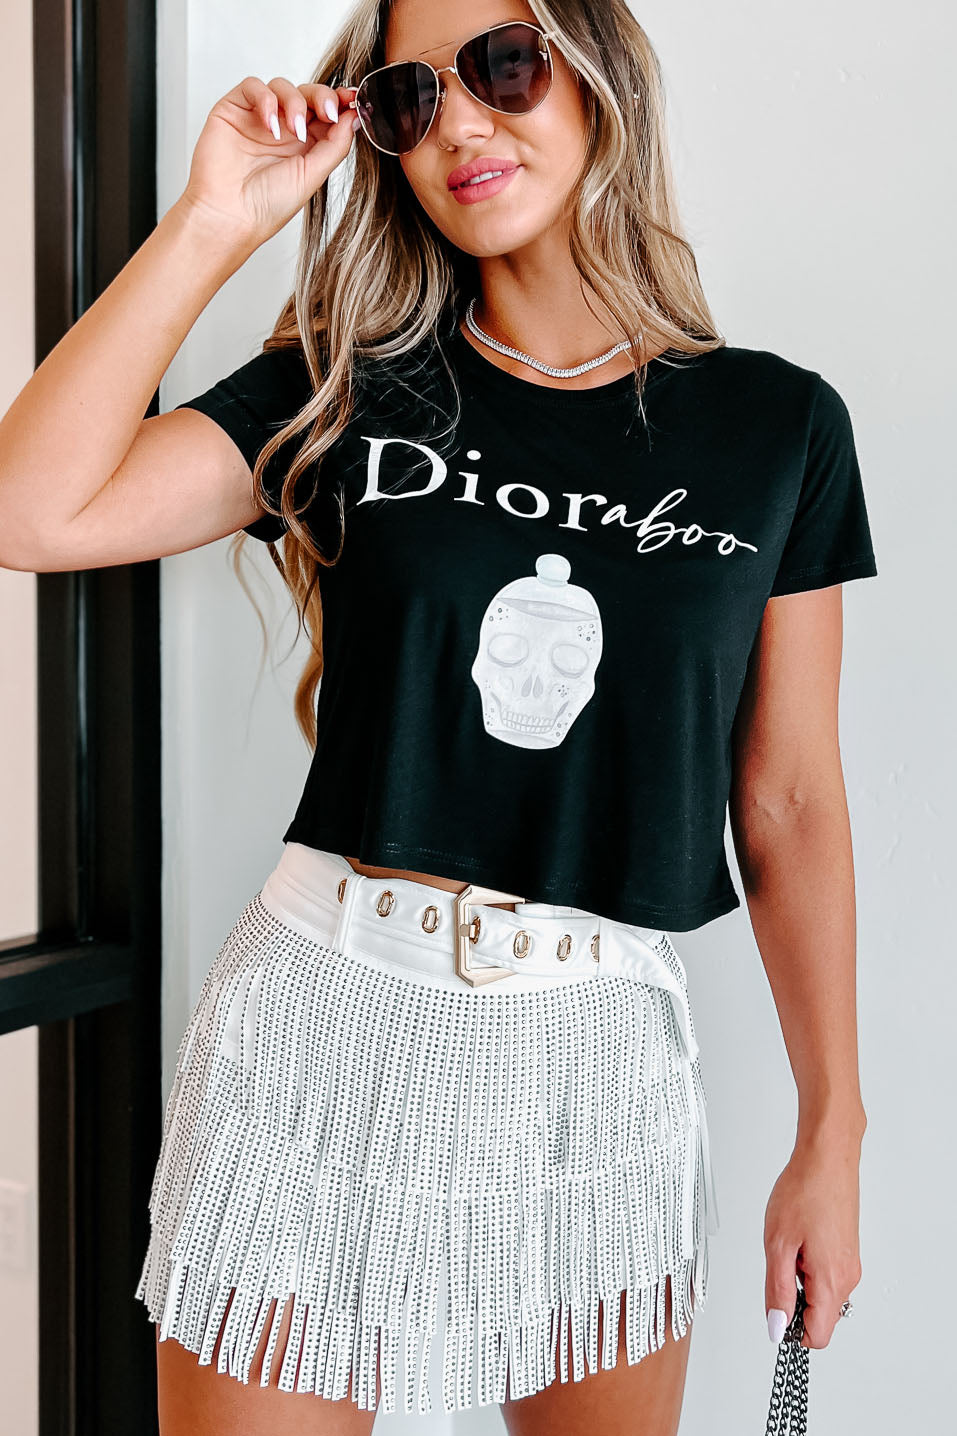 "Dioraboo" Graphic - Multiple Shirt Options (Black/White Text) - Print On Demand - NanaMacs